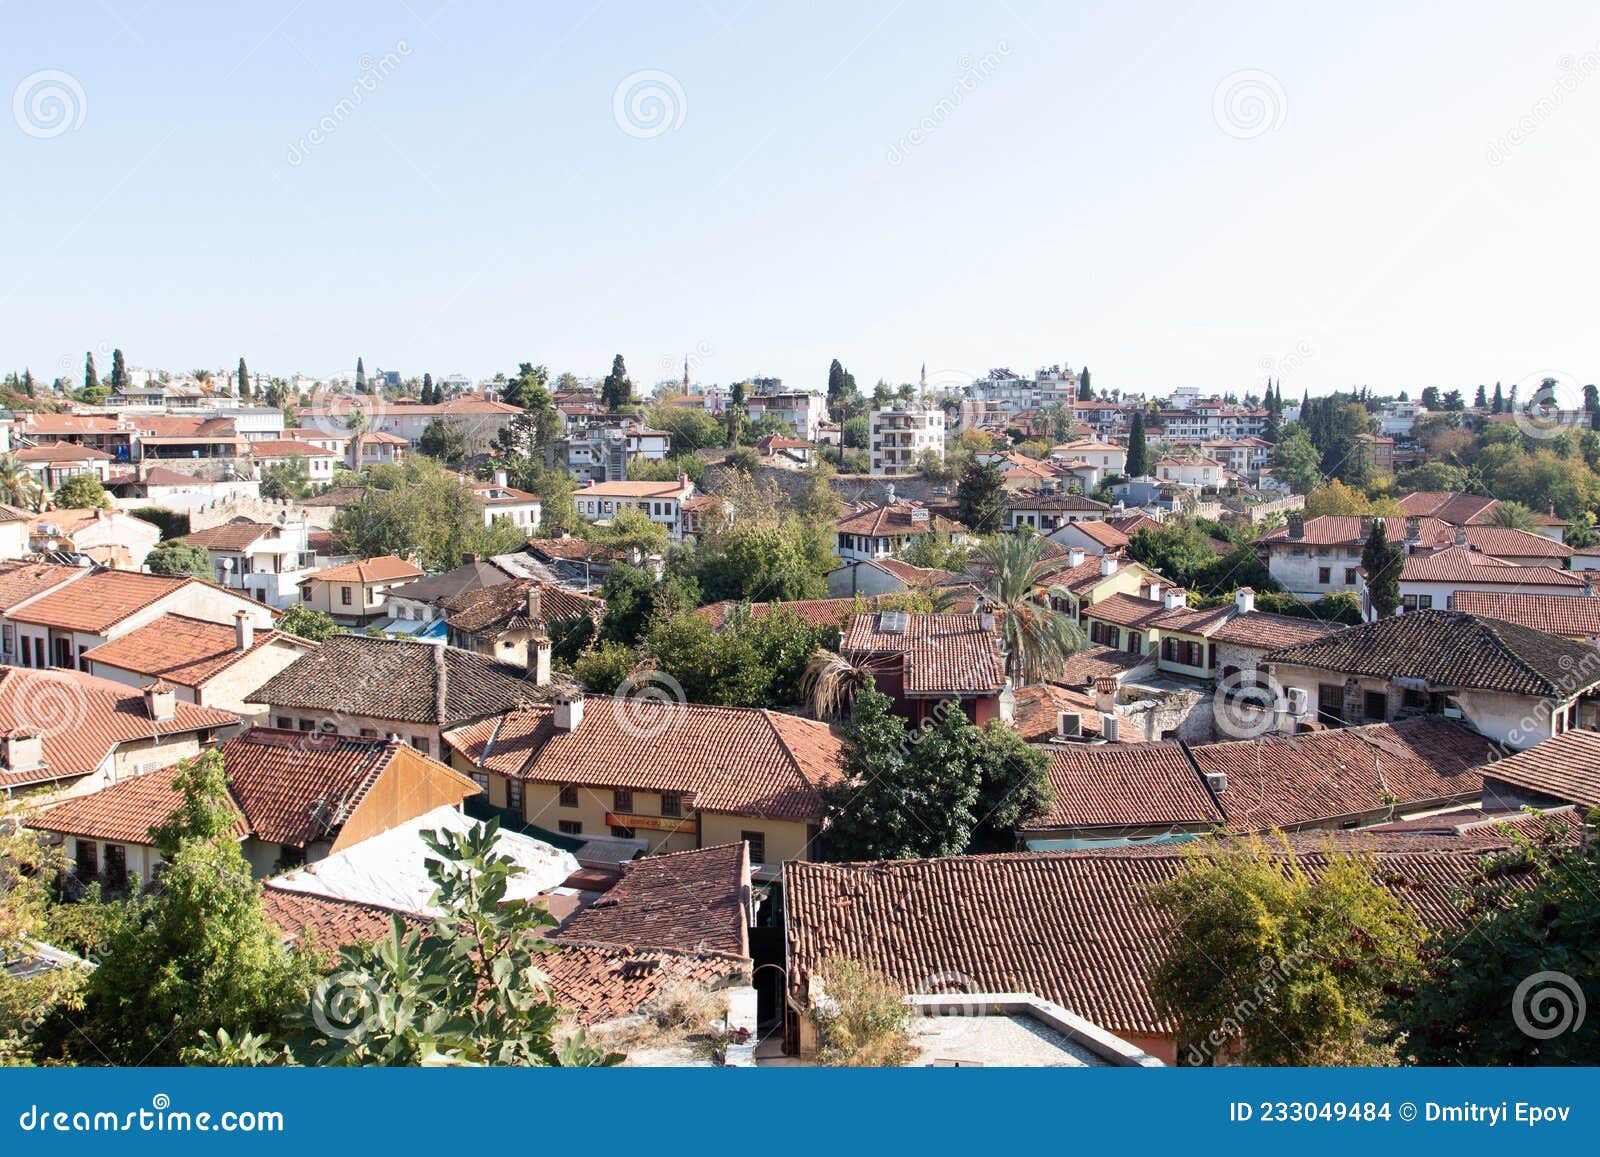 view of the old town of kaleichi, turkey.